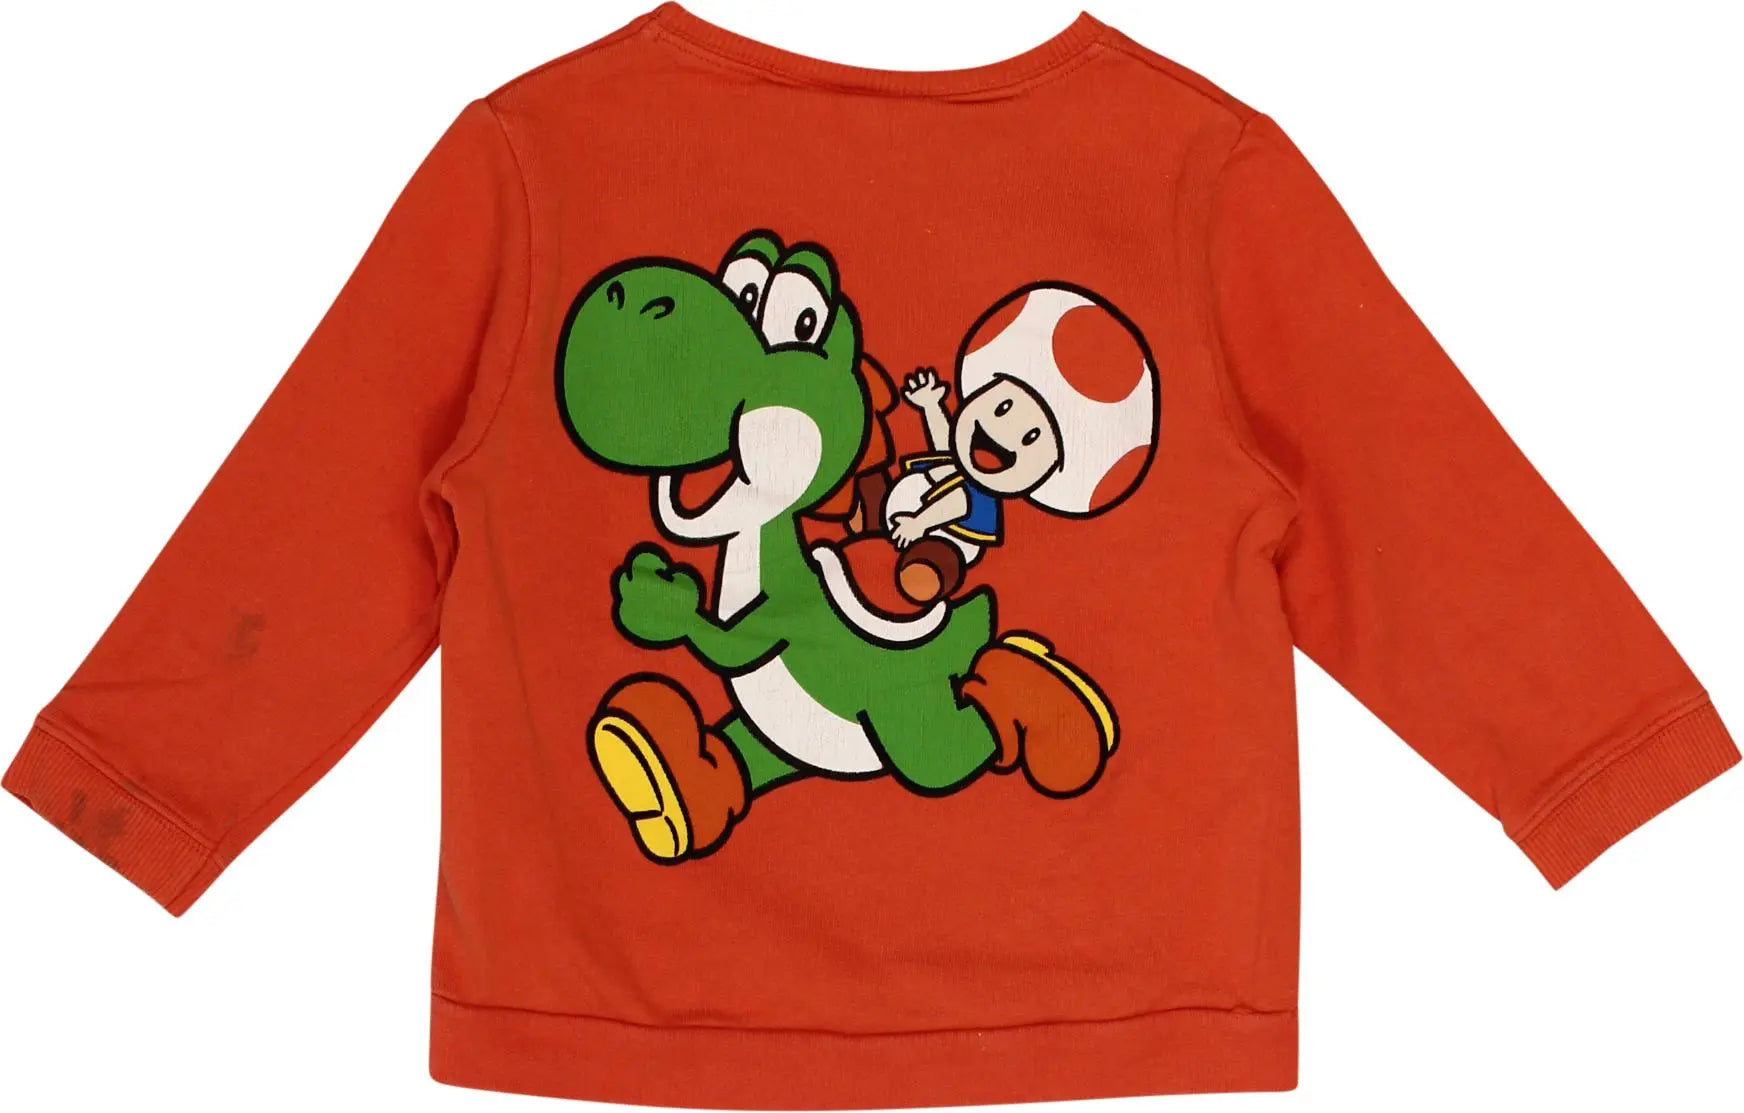 Zara - Mario Sweatshirt- ThriftTale.com - Vintage and second handclothing